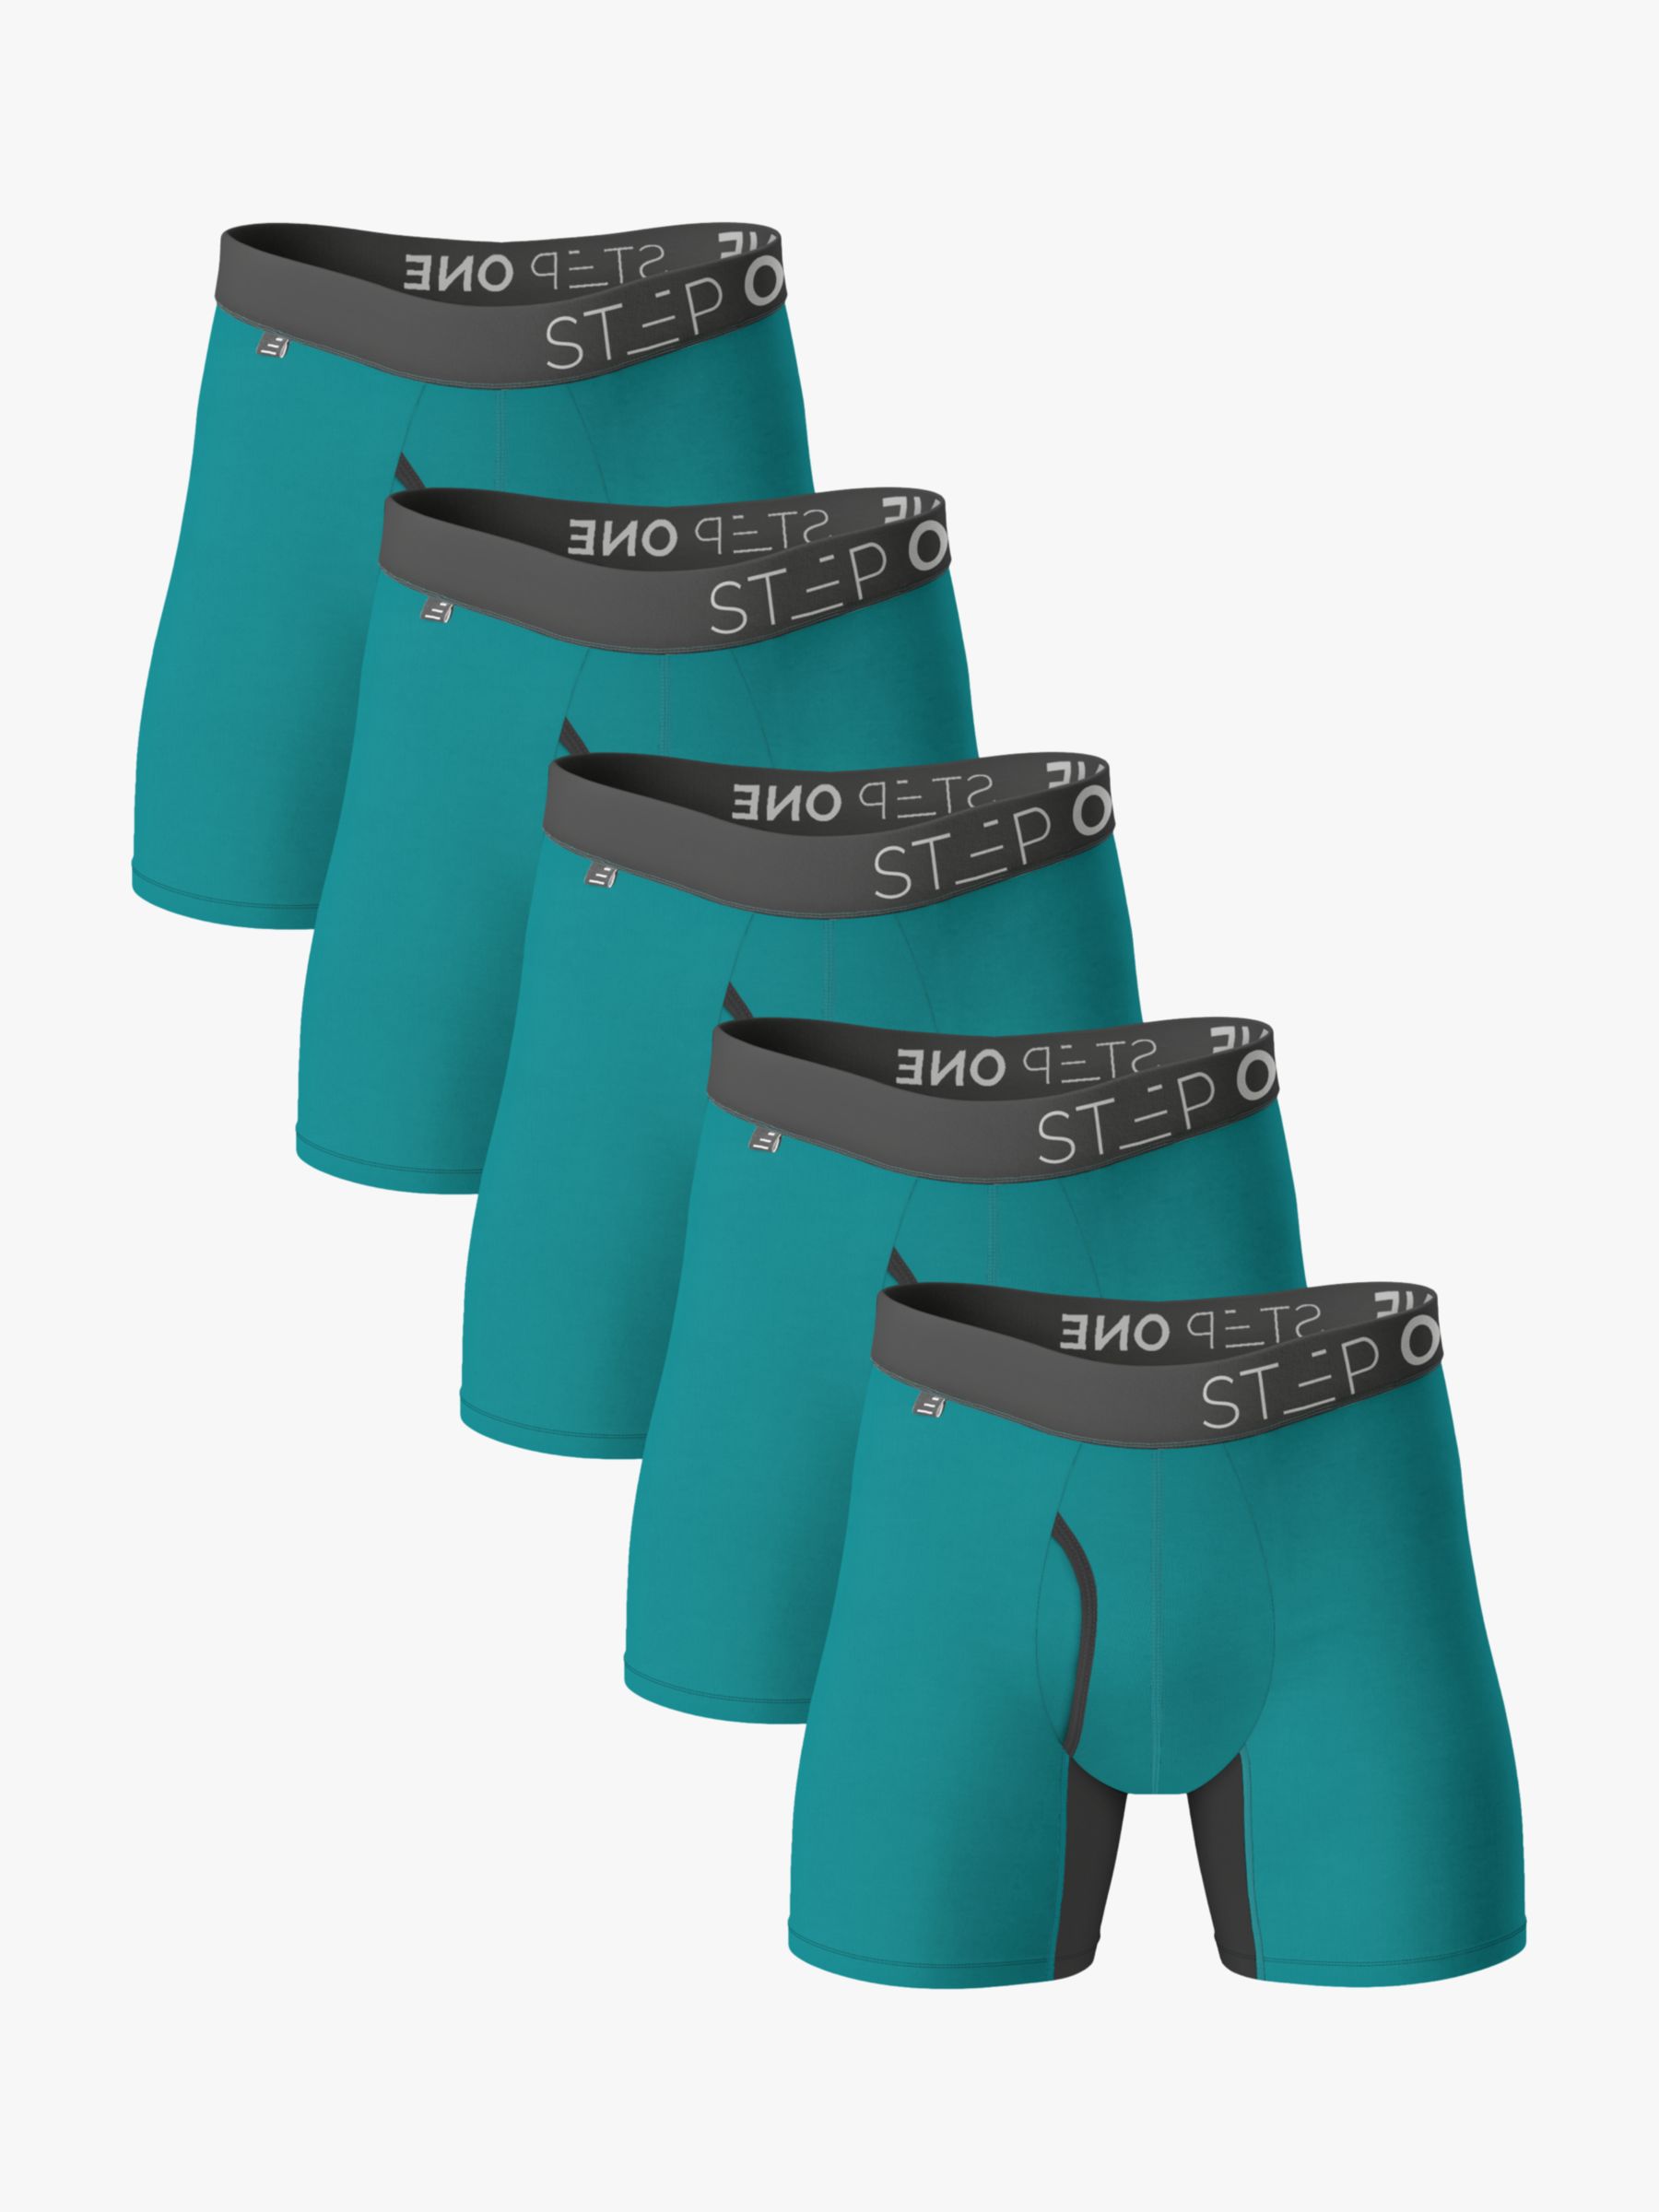 Boxer Brief - Black Currants  Step One Men's Bamboo Underwear